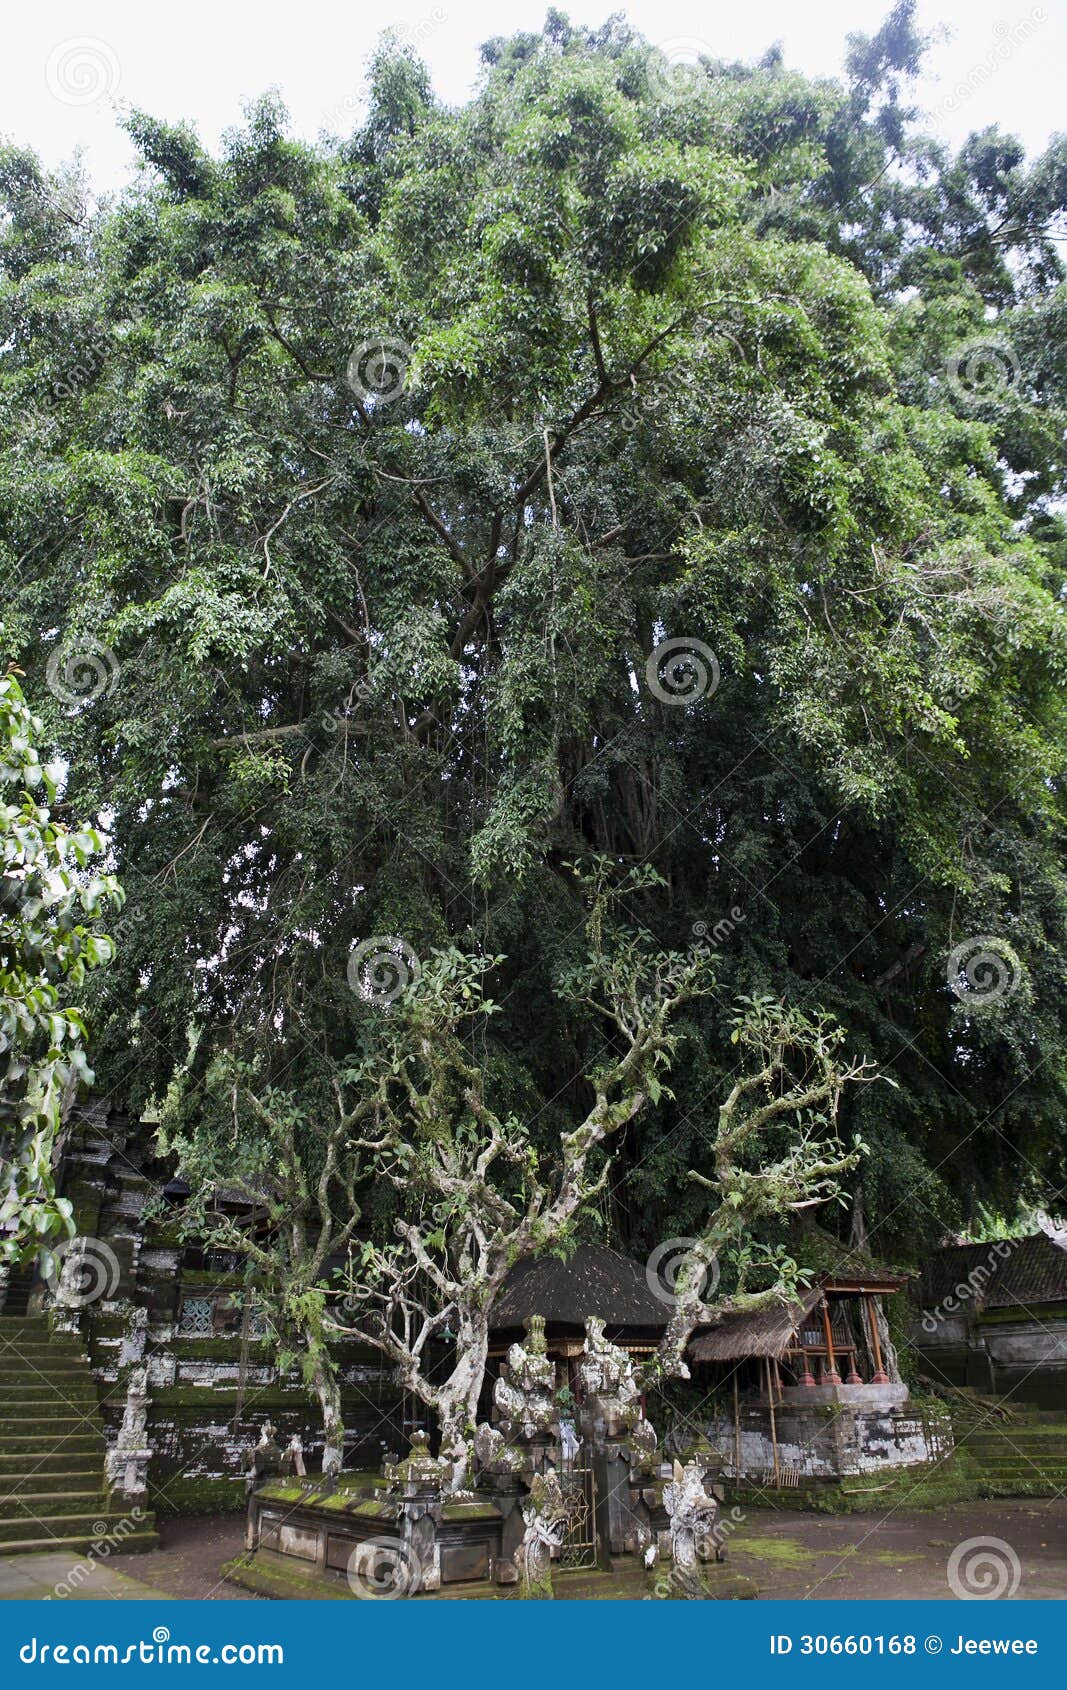 Huge Banyan Tree In The Pura Kehen Temple In Bali Indonesia Stock